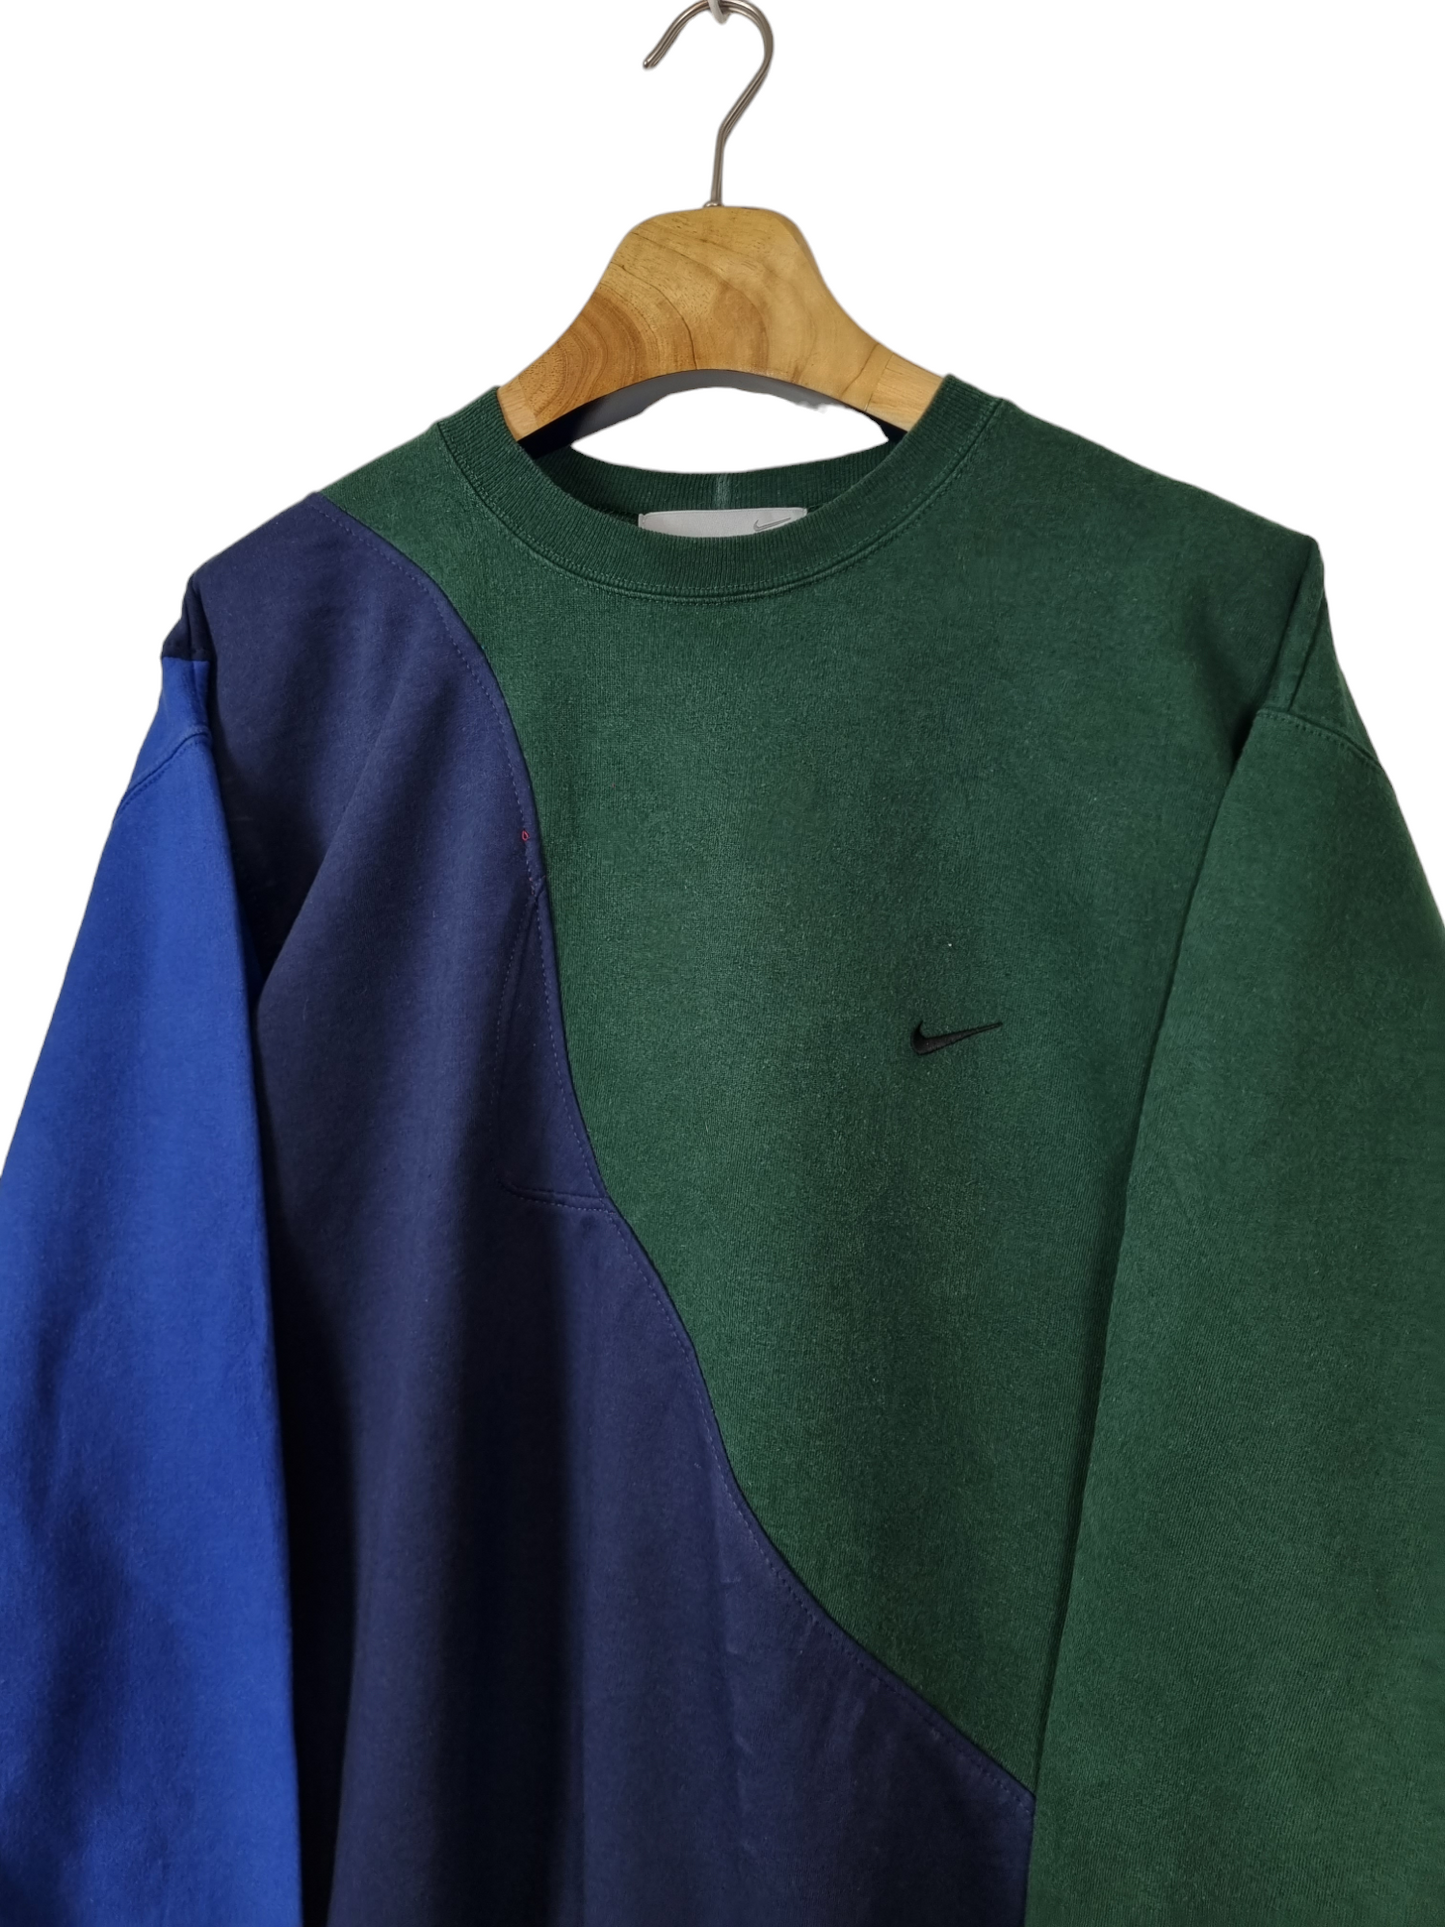 Nike chest swoosh logo sweater maat M/L